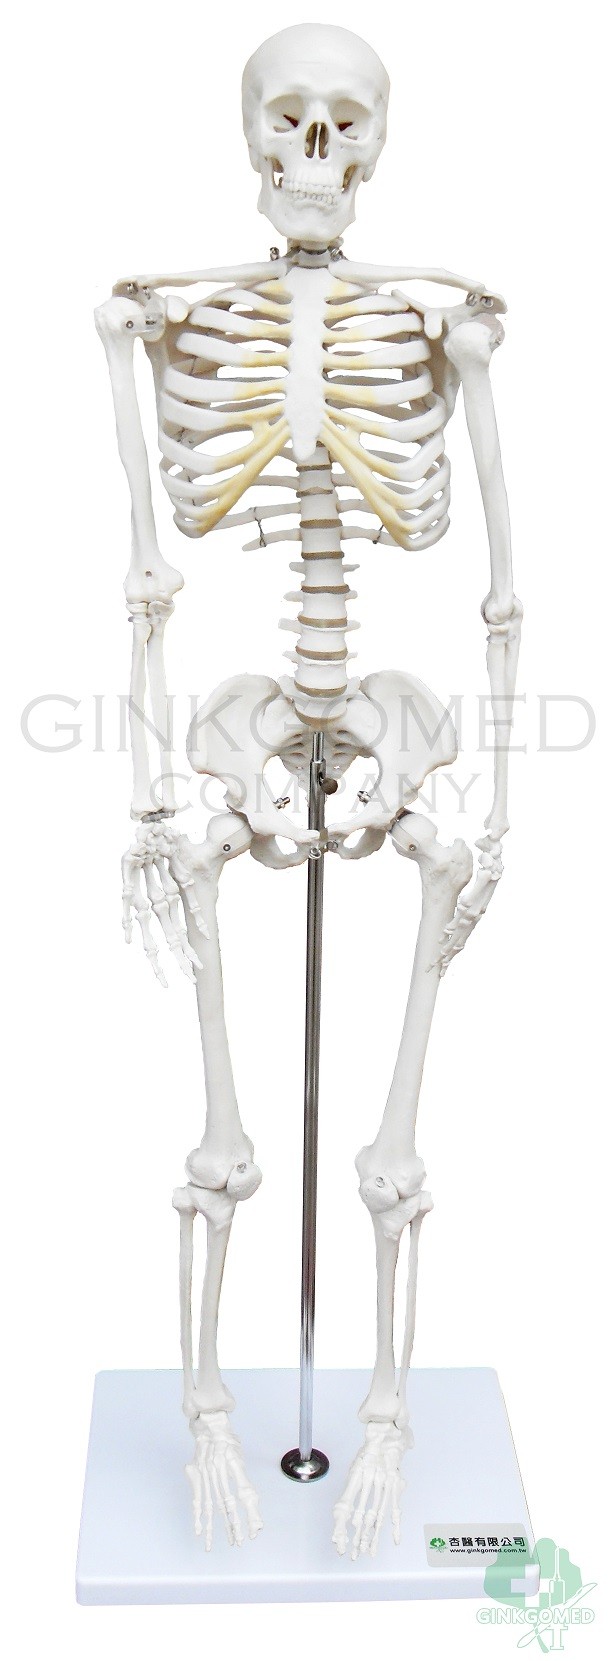 GM-010032 Min-sized Human Skeleton